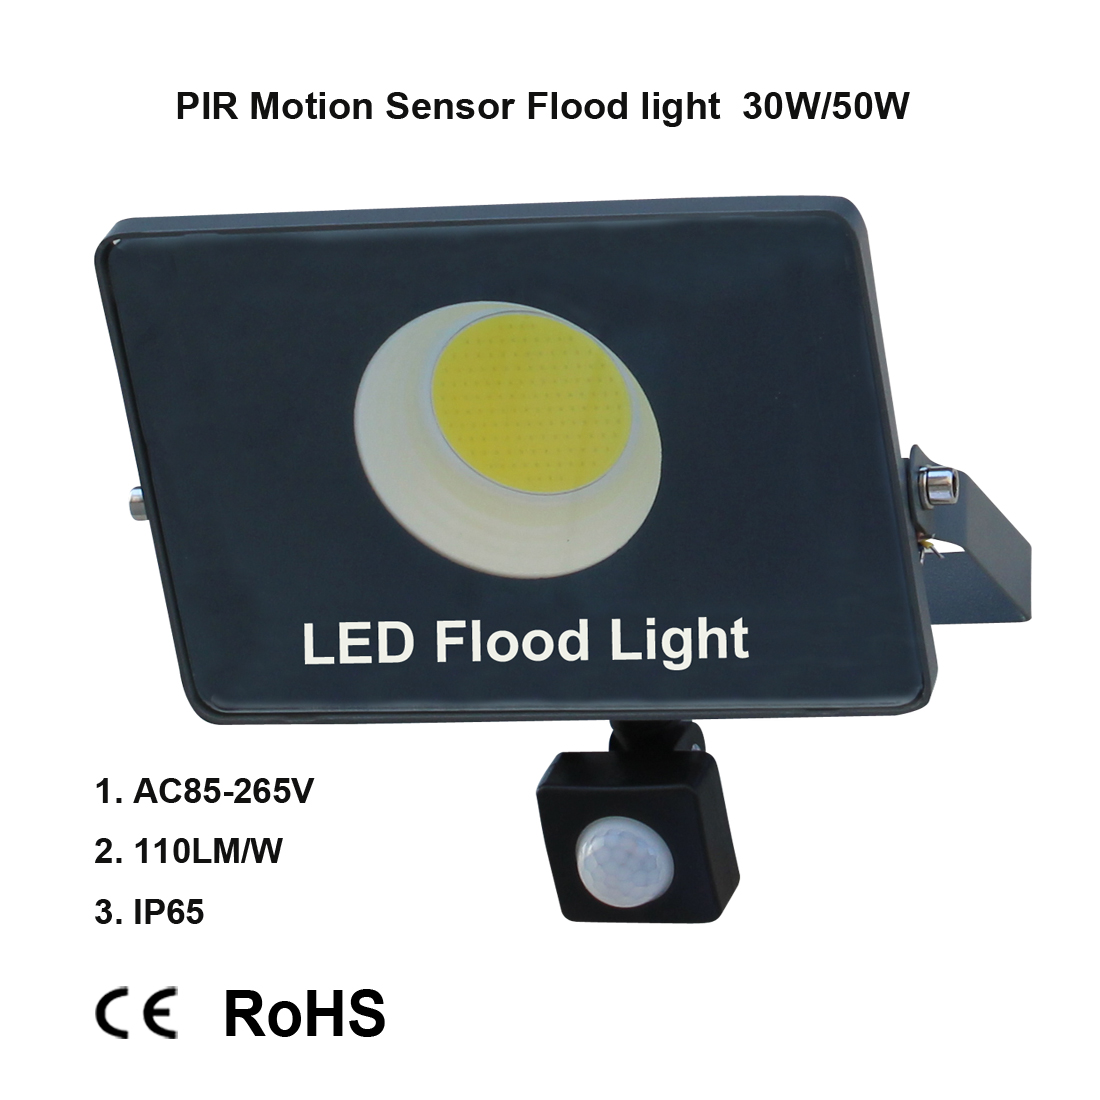 LED induction lamp 30W 50W 100W Flood light PIR motion sensor indoor and outdoor lighting decorative lighting home street garden